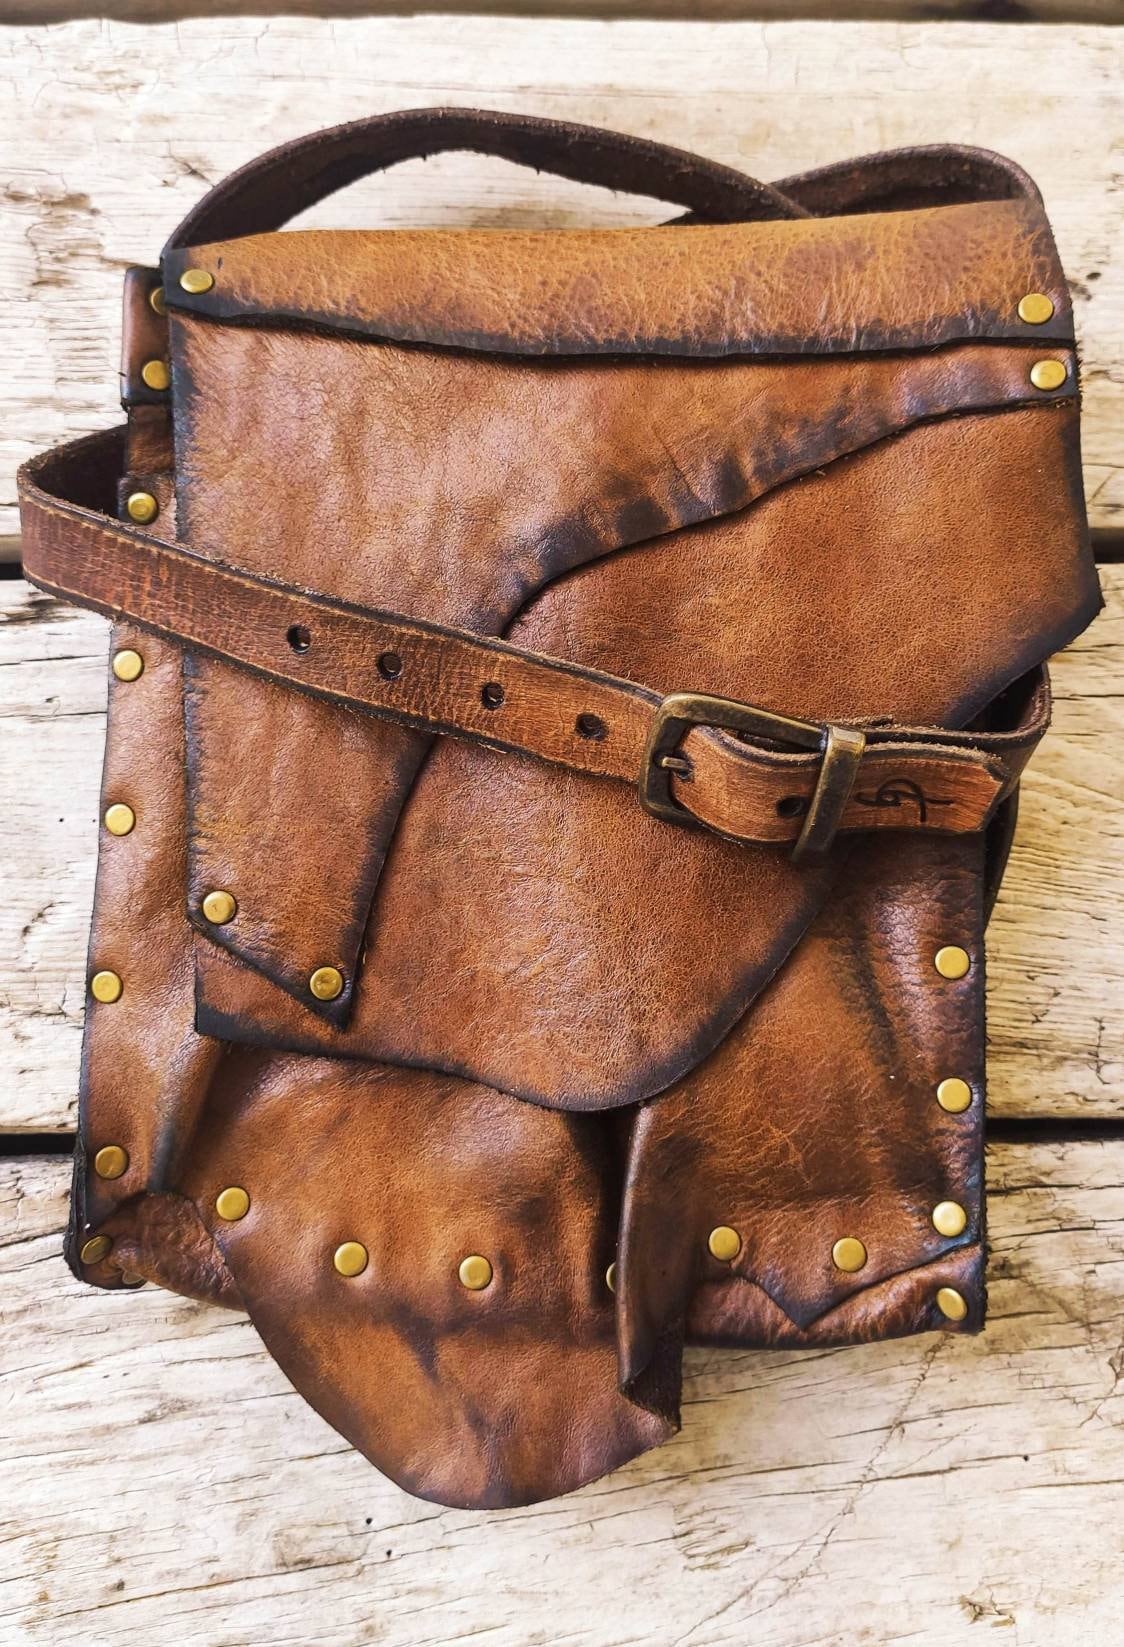 worn leather bag